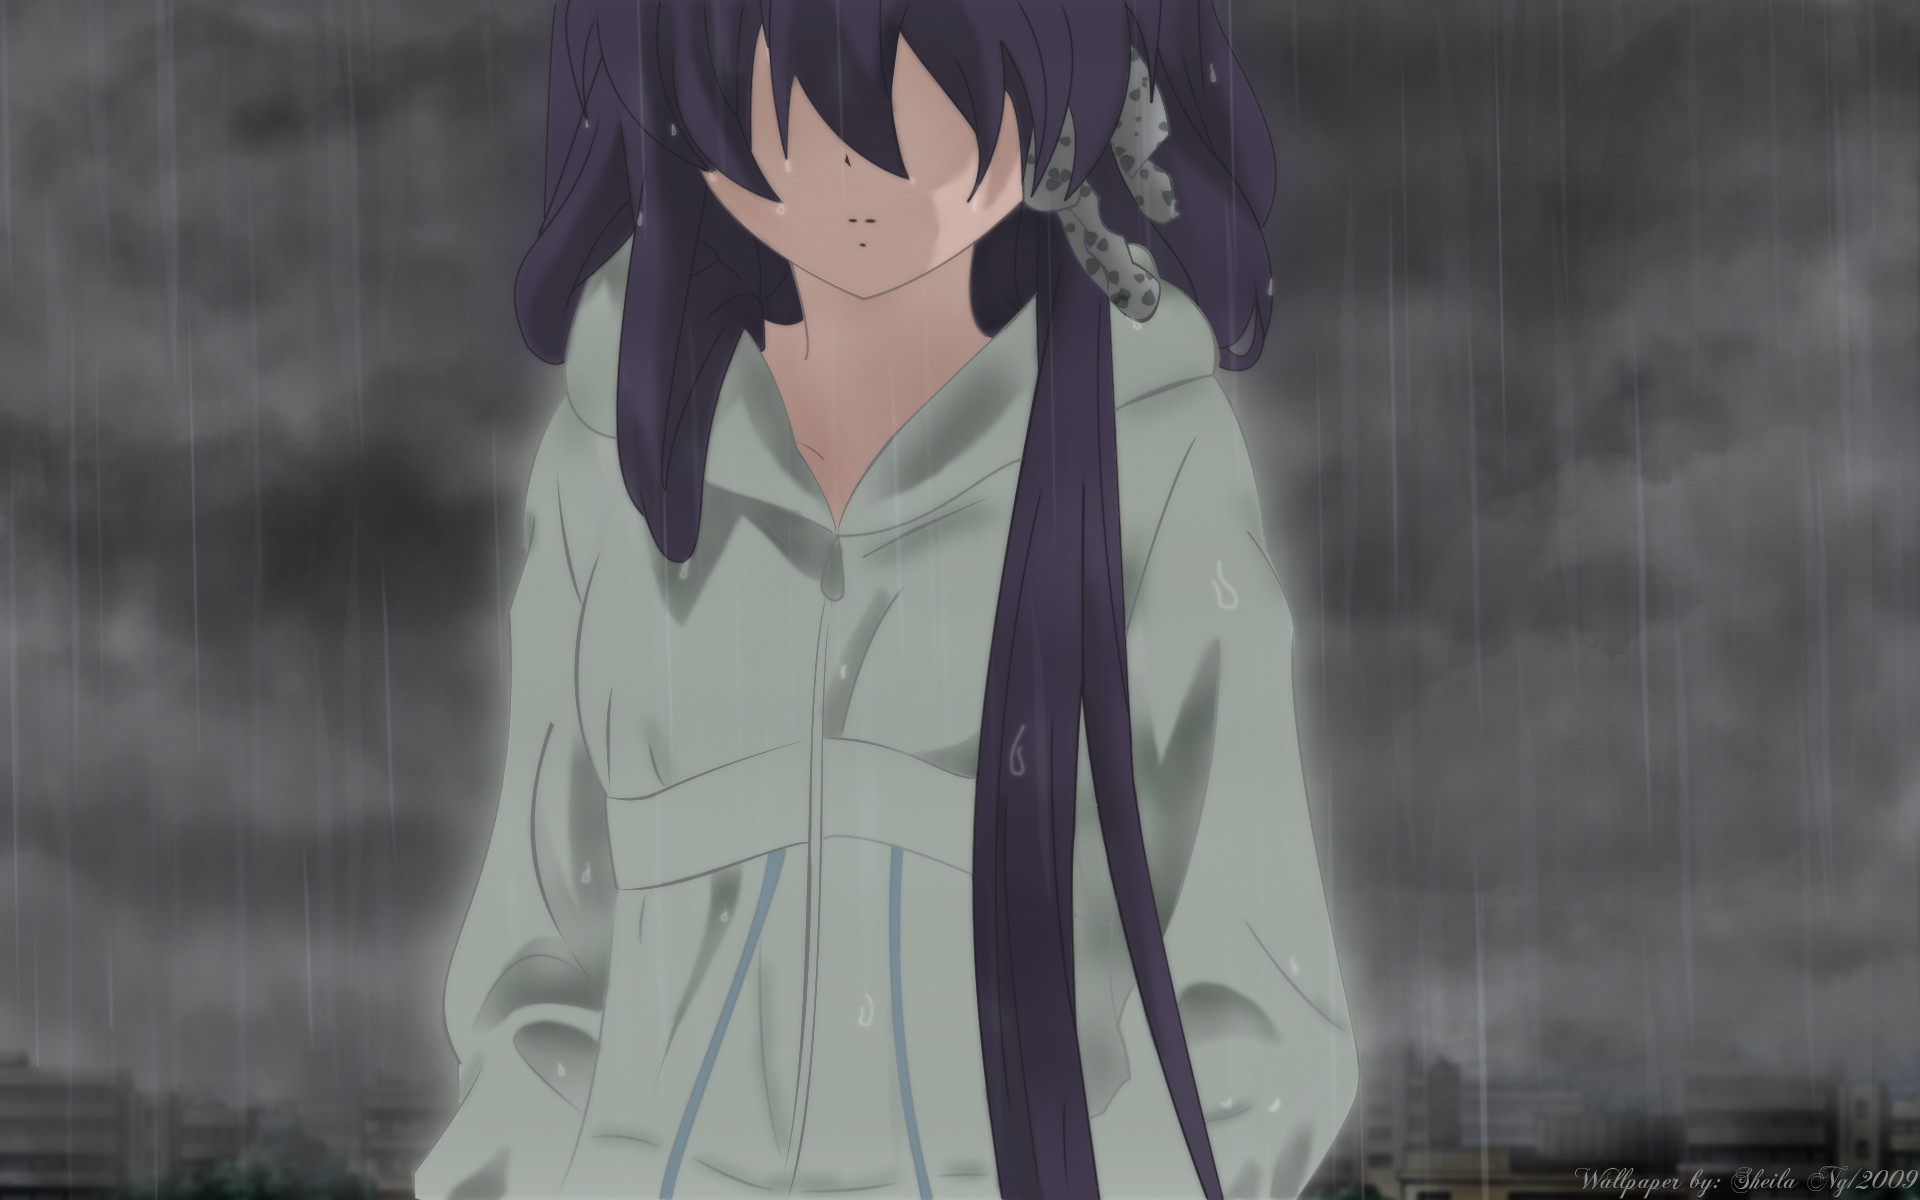 Anime Girl Crying In The Rain Alone Rain Sad Anime